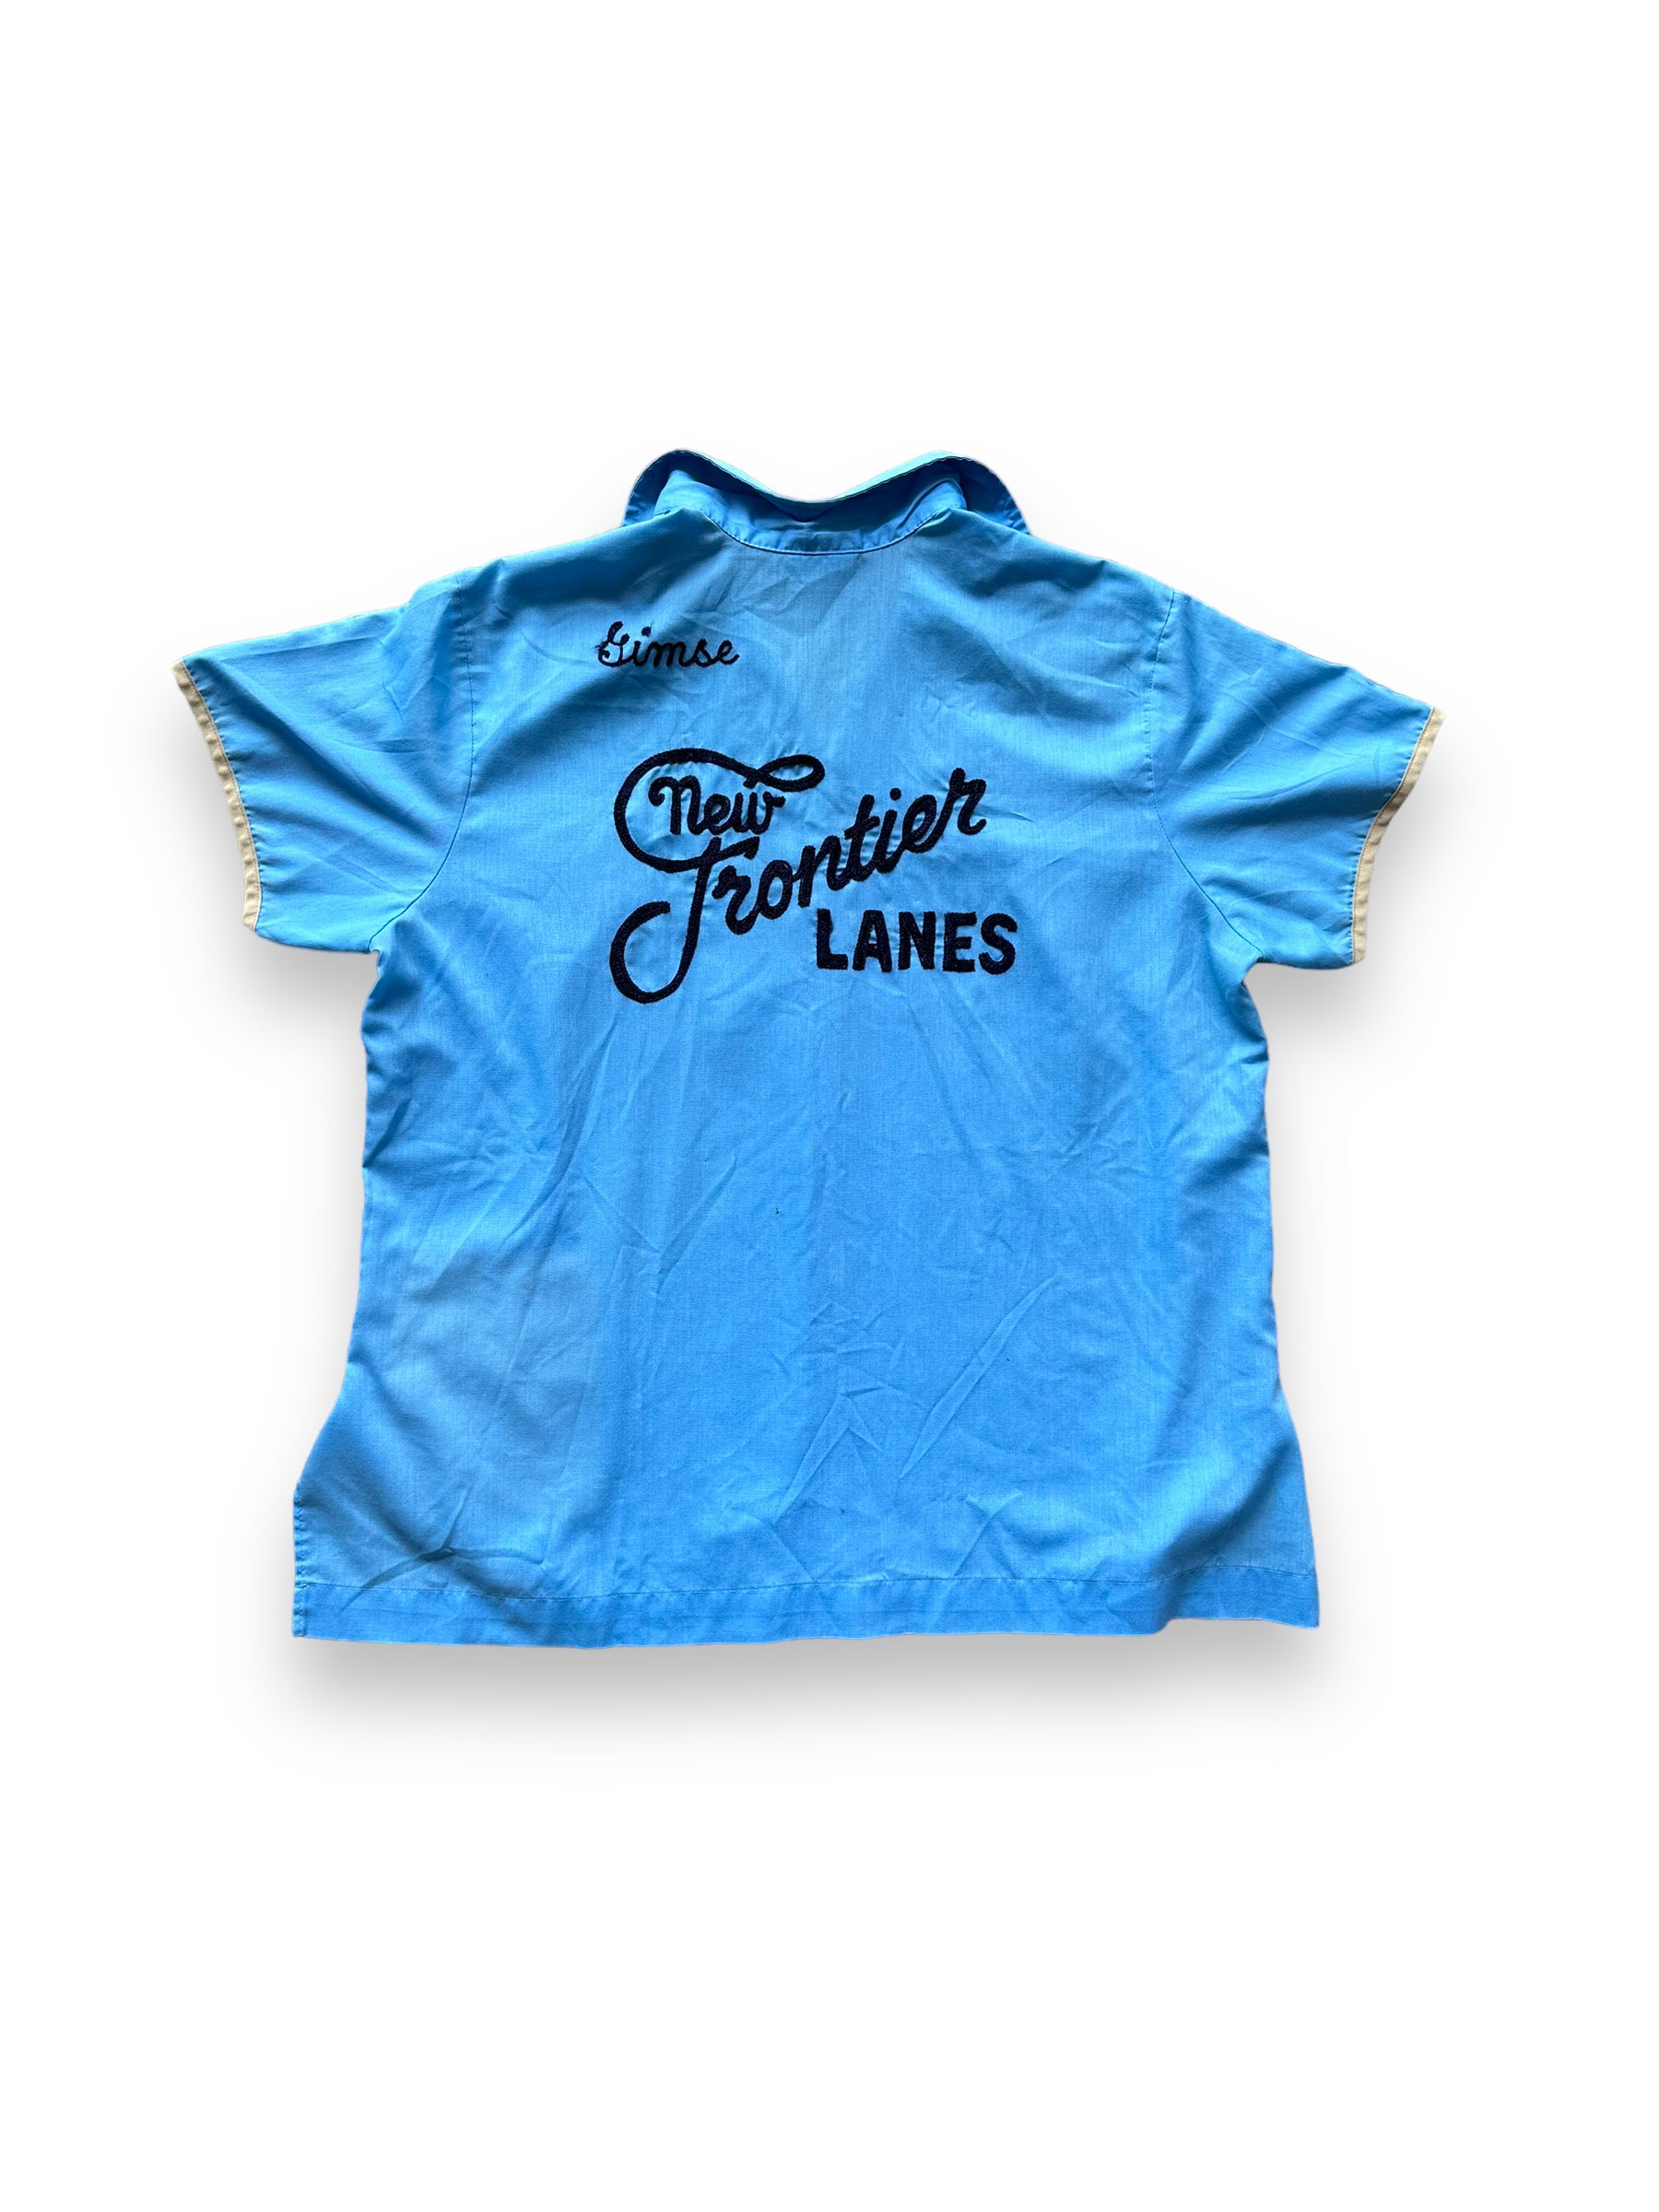 Back of Vintage "New Frontier Lanes" Chainstitched Bowling Shirt SZ 40 | Vintage Bowling Shirt Seattle | Barn Owl Vintage Seattle